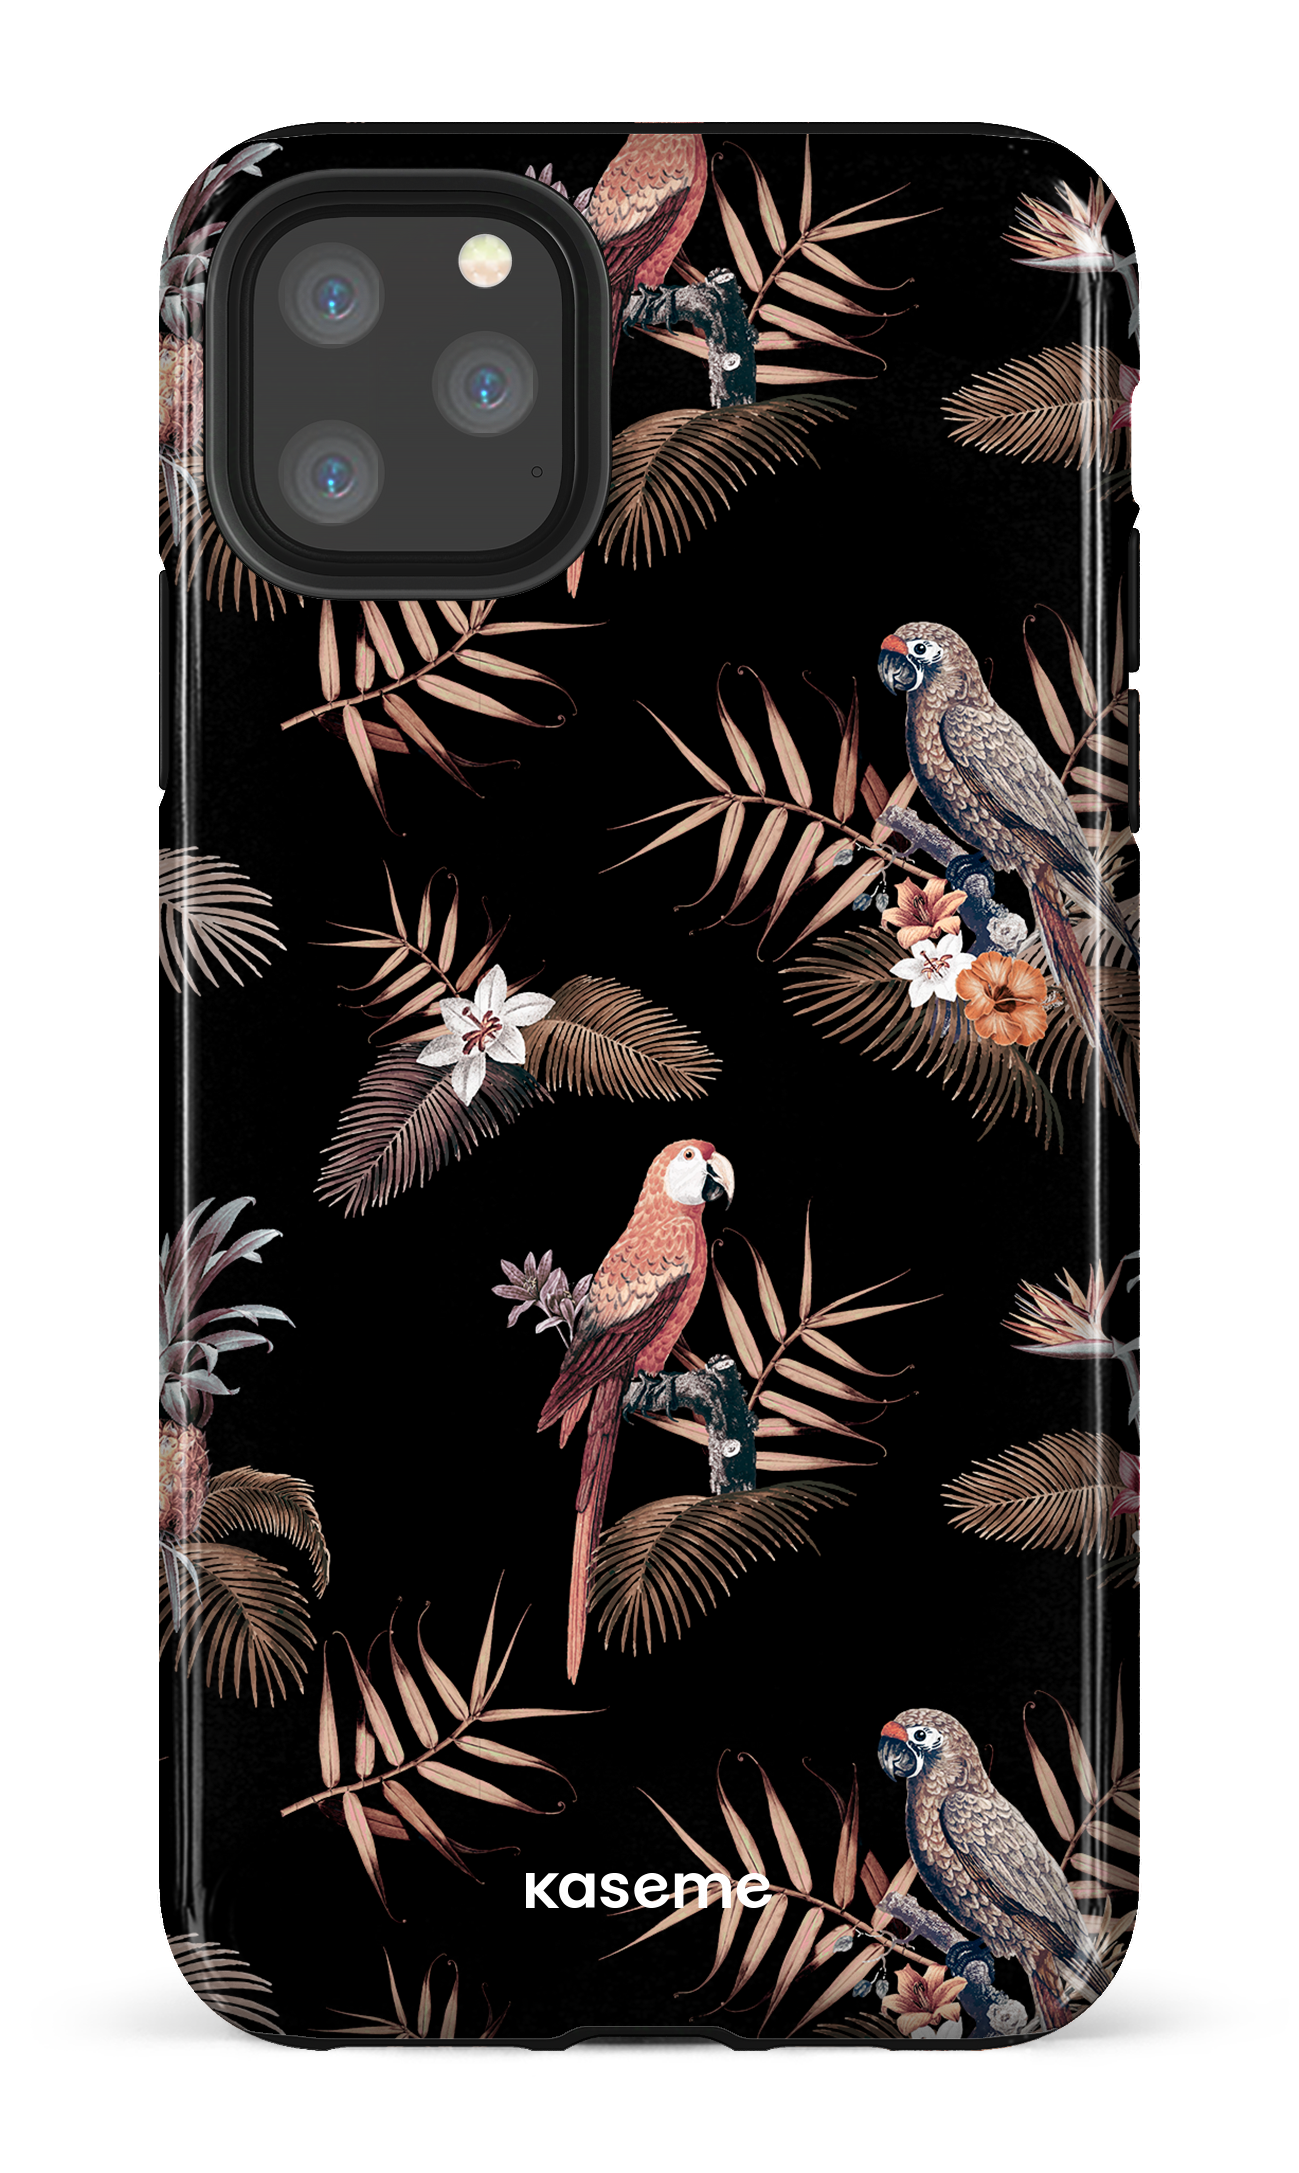 Rainforest - iPhone 11 Pro Max